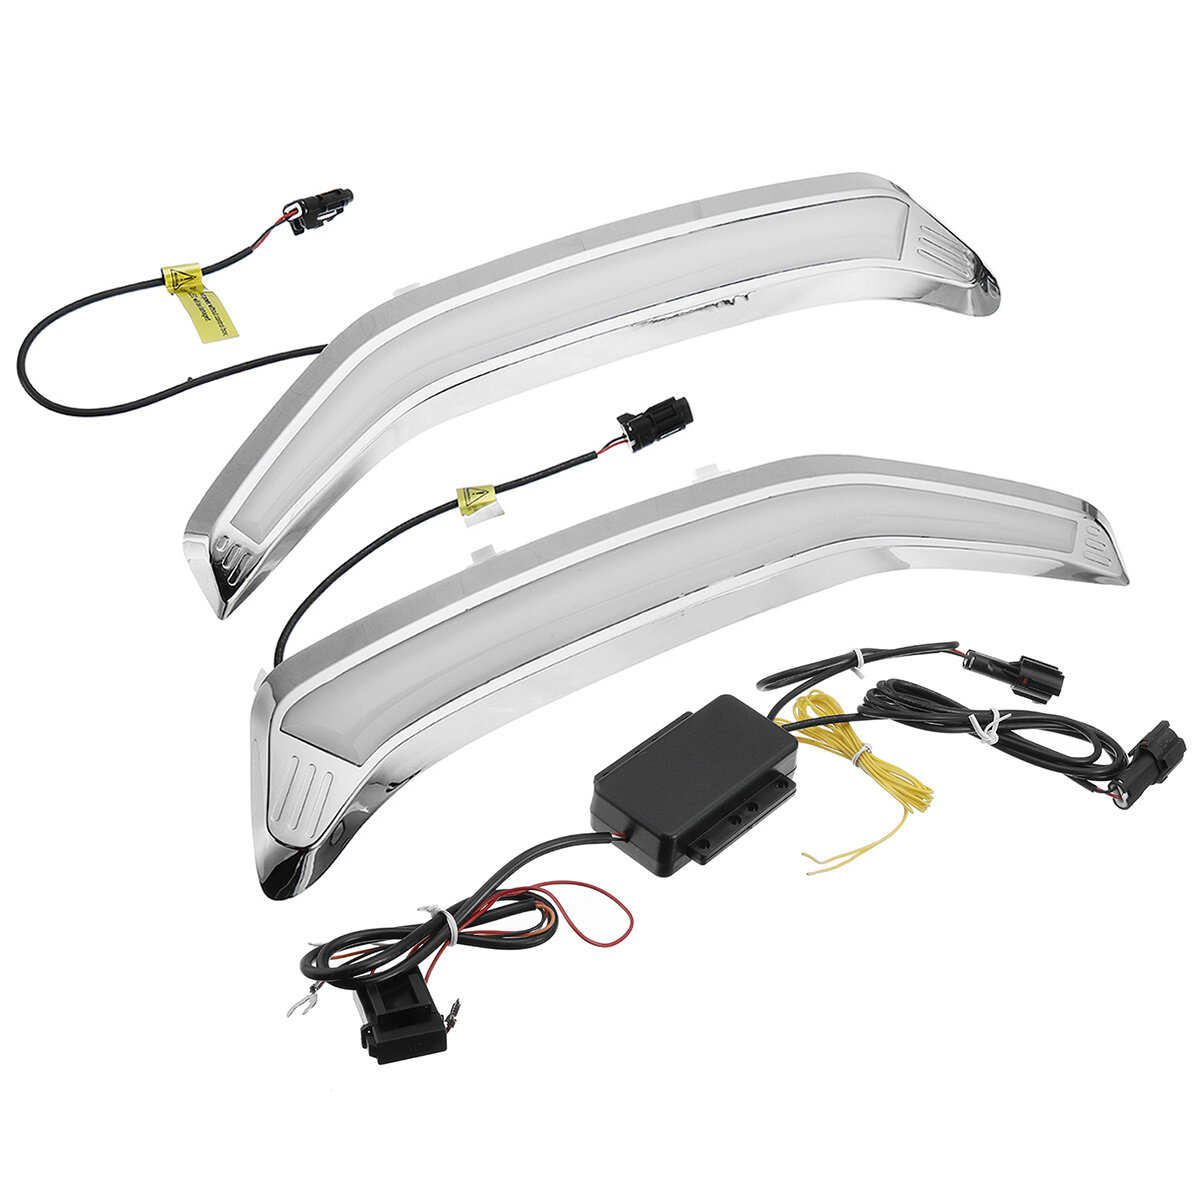 

2Pcs Car LED DRL Daytime Running Lights Turn Signal Fog Lamps Waterproof White&Yellow Lighting For Subaru Forester 2013-